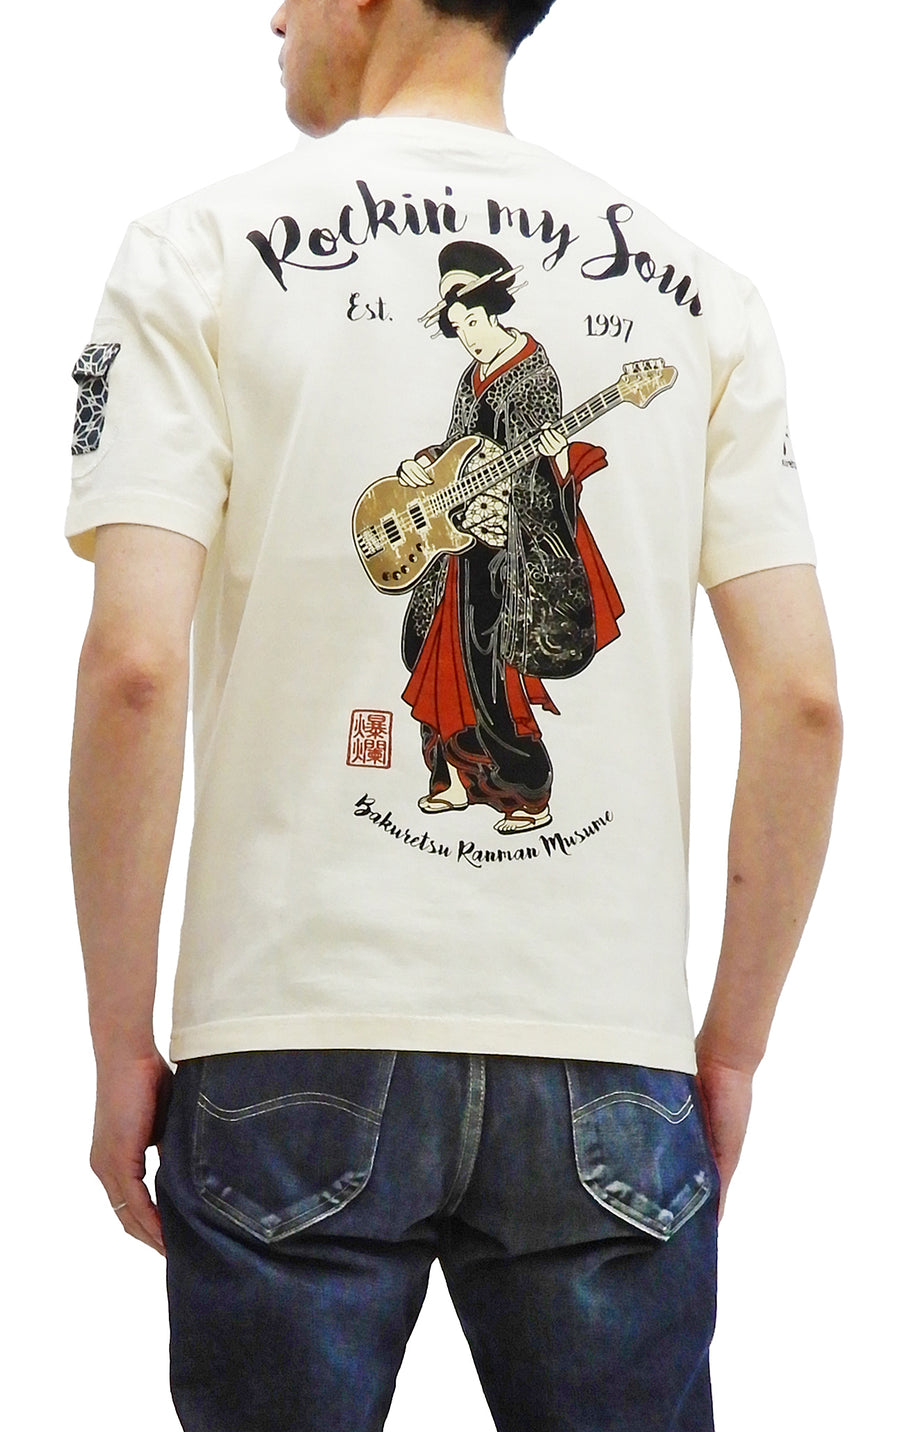 B-R-M T-Shirt Men's Japanese Art Ukiyo-e Style Graphic Short Sleeve Tee RMT-309 Off-White